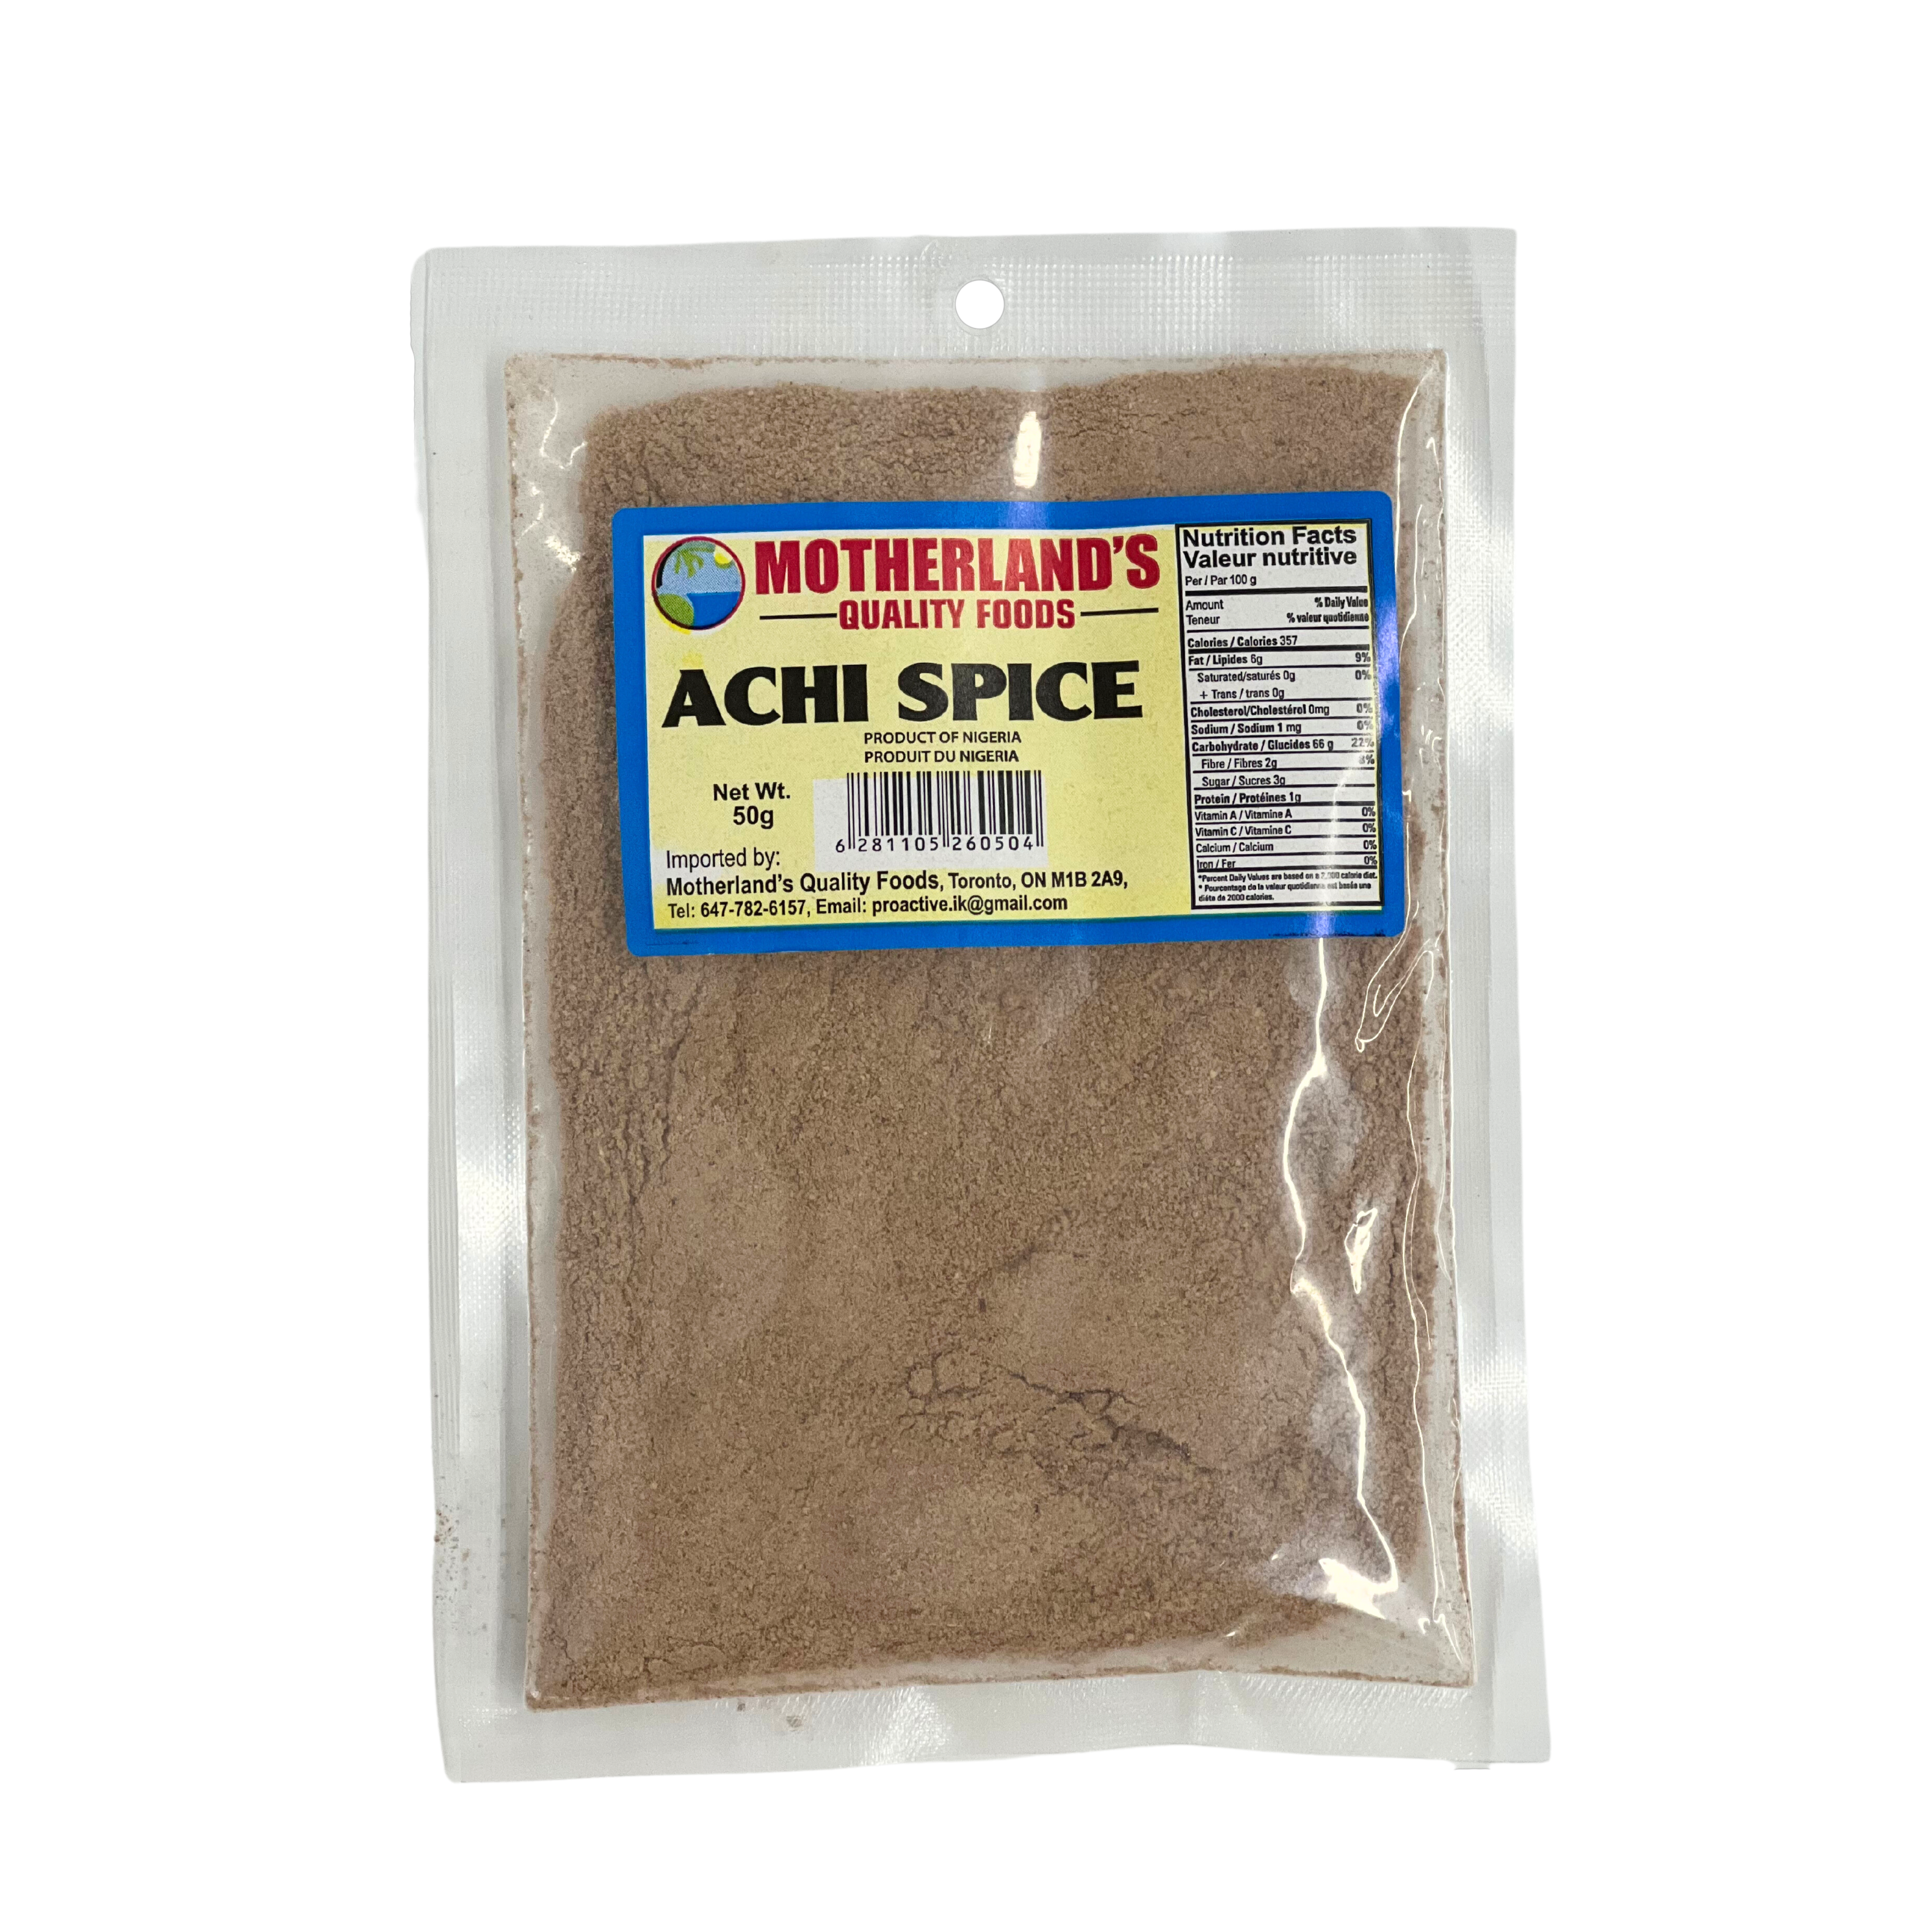 Motherland's Achi Spice 50g